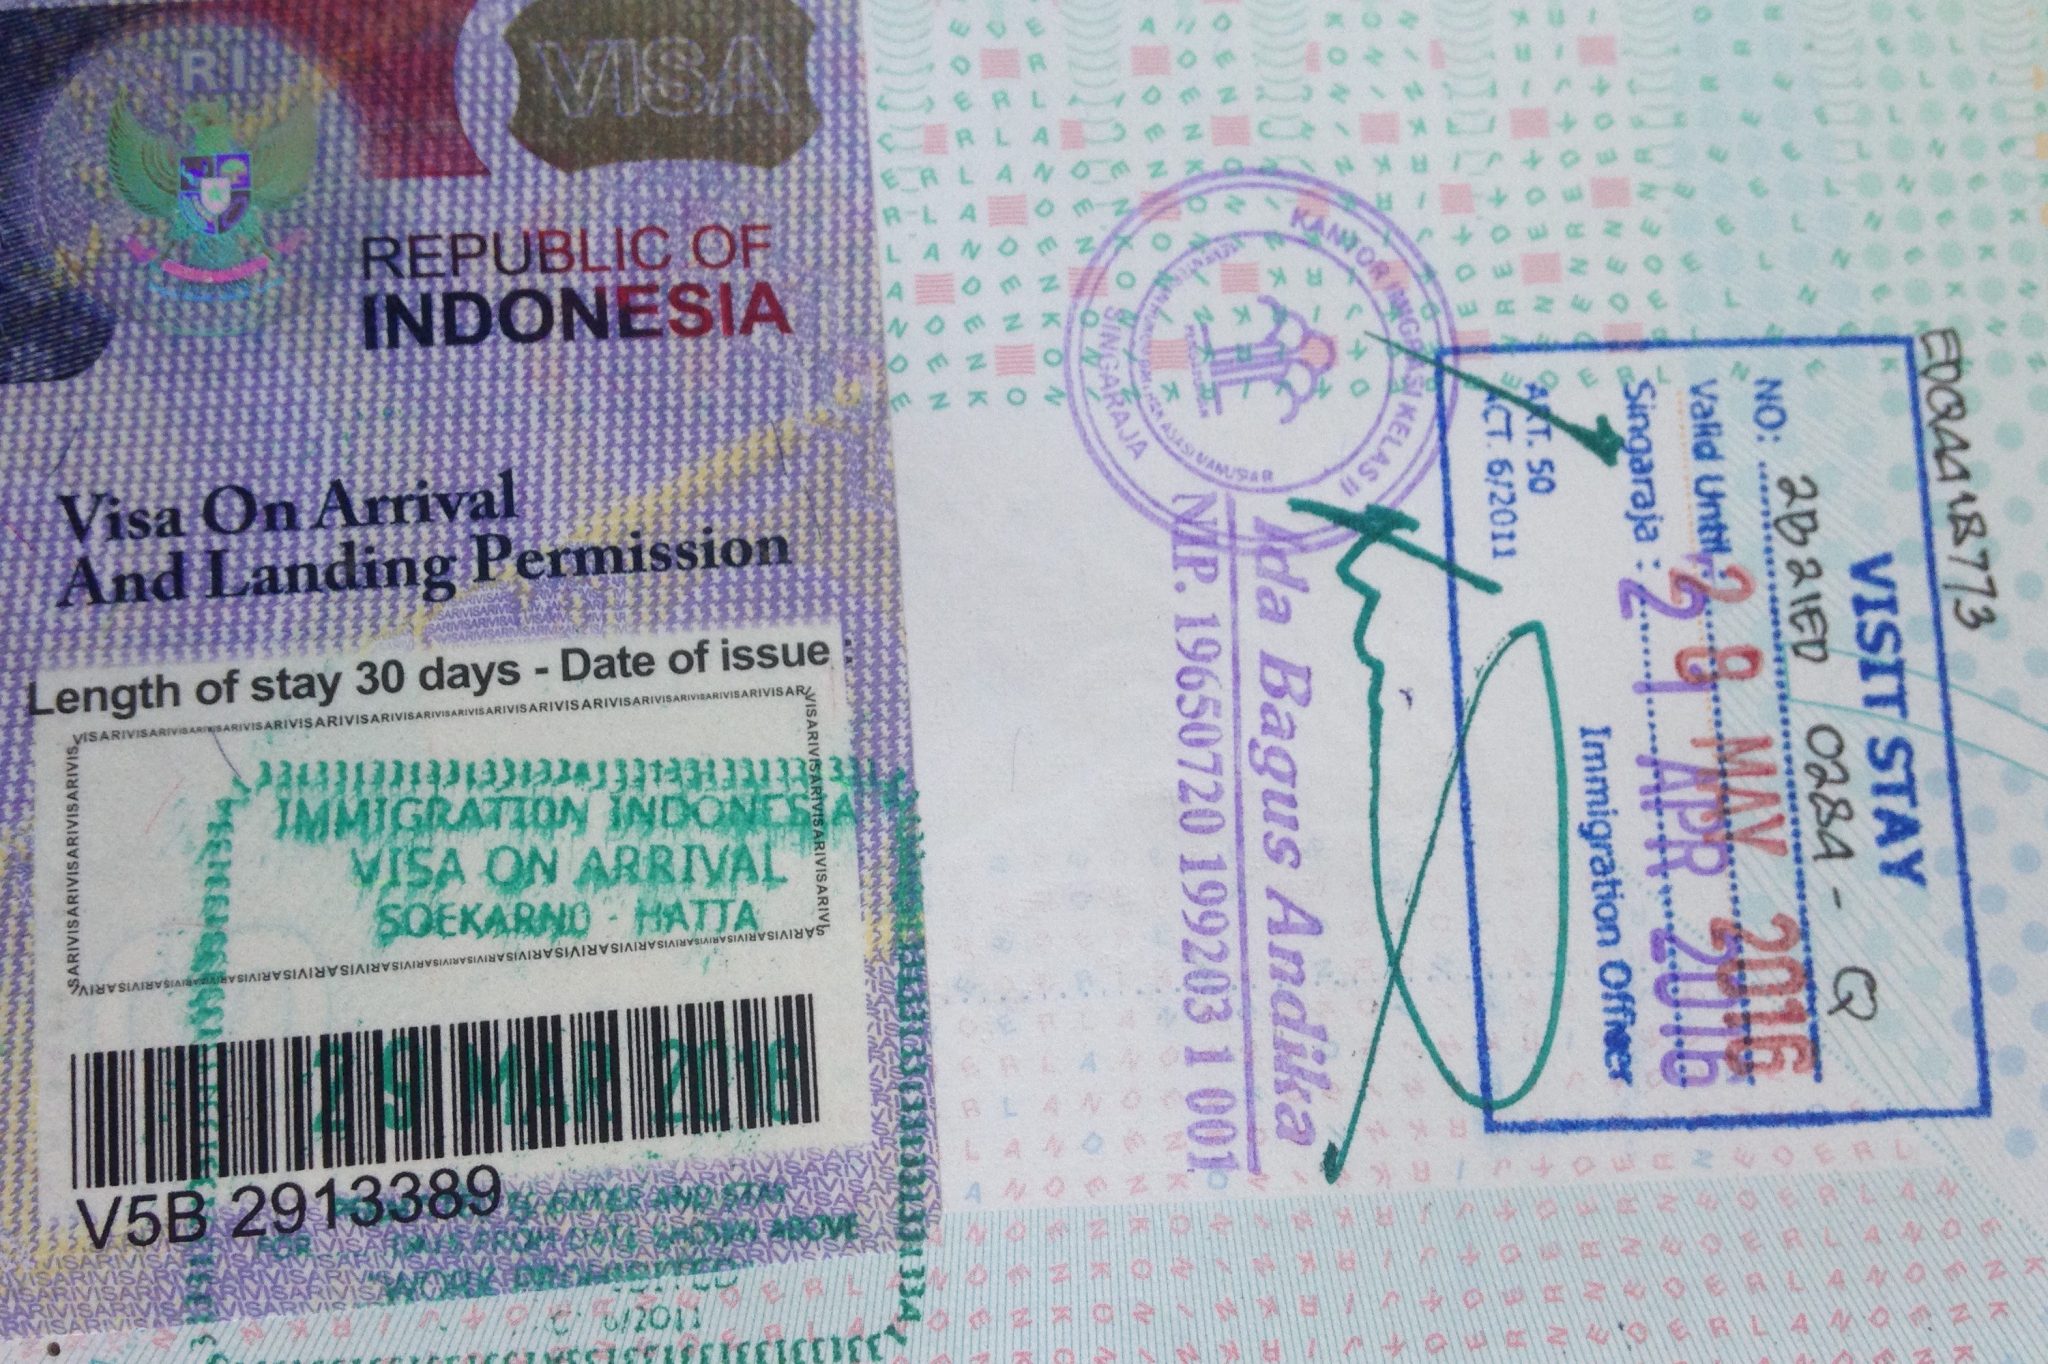 Gelukt! Ons visum voor Indonesië is verlengt.